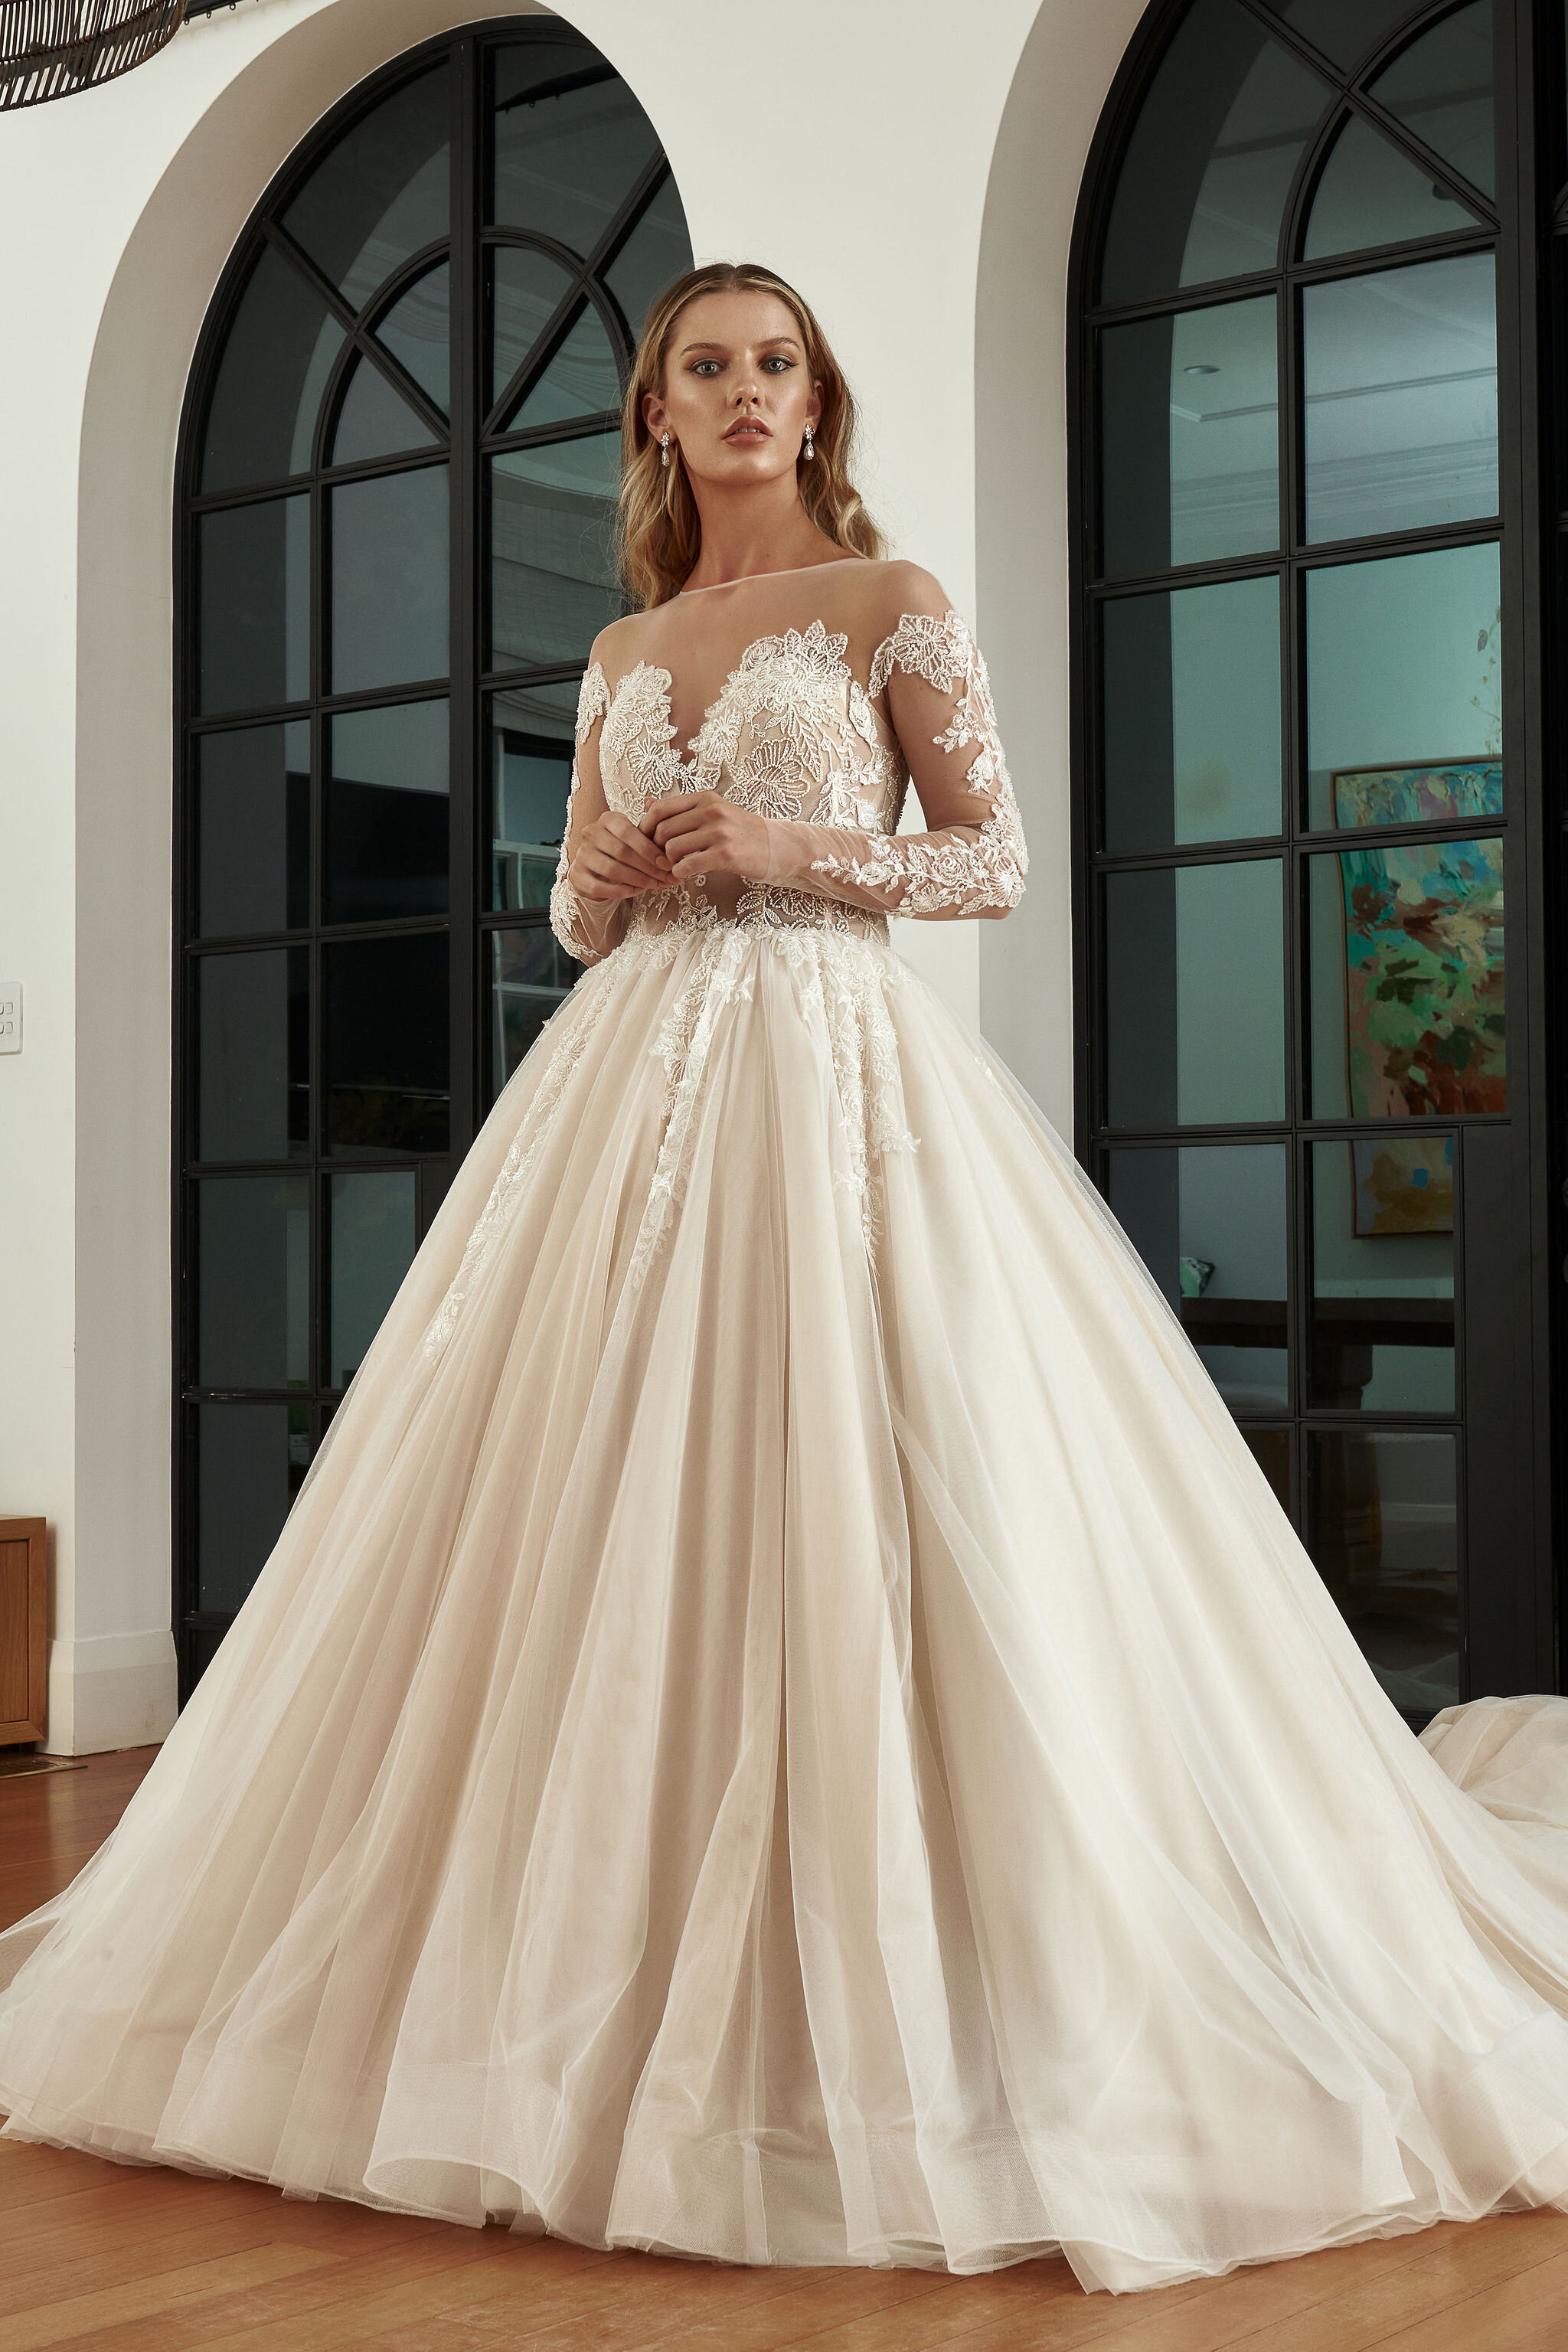 Étoile Collection — Blanche Bridal | Designer Wedding Dresses